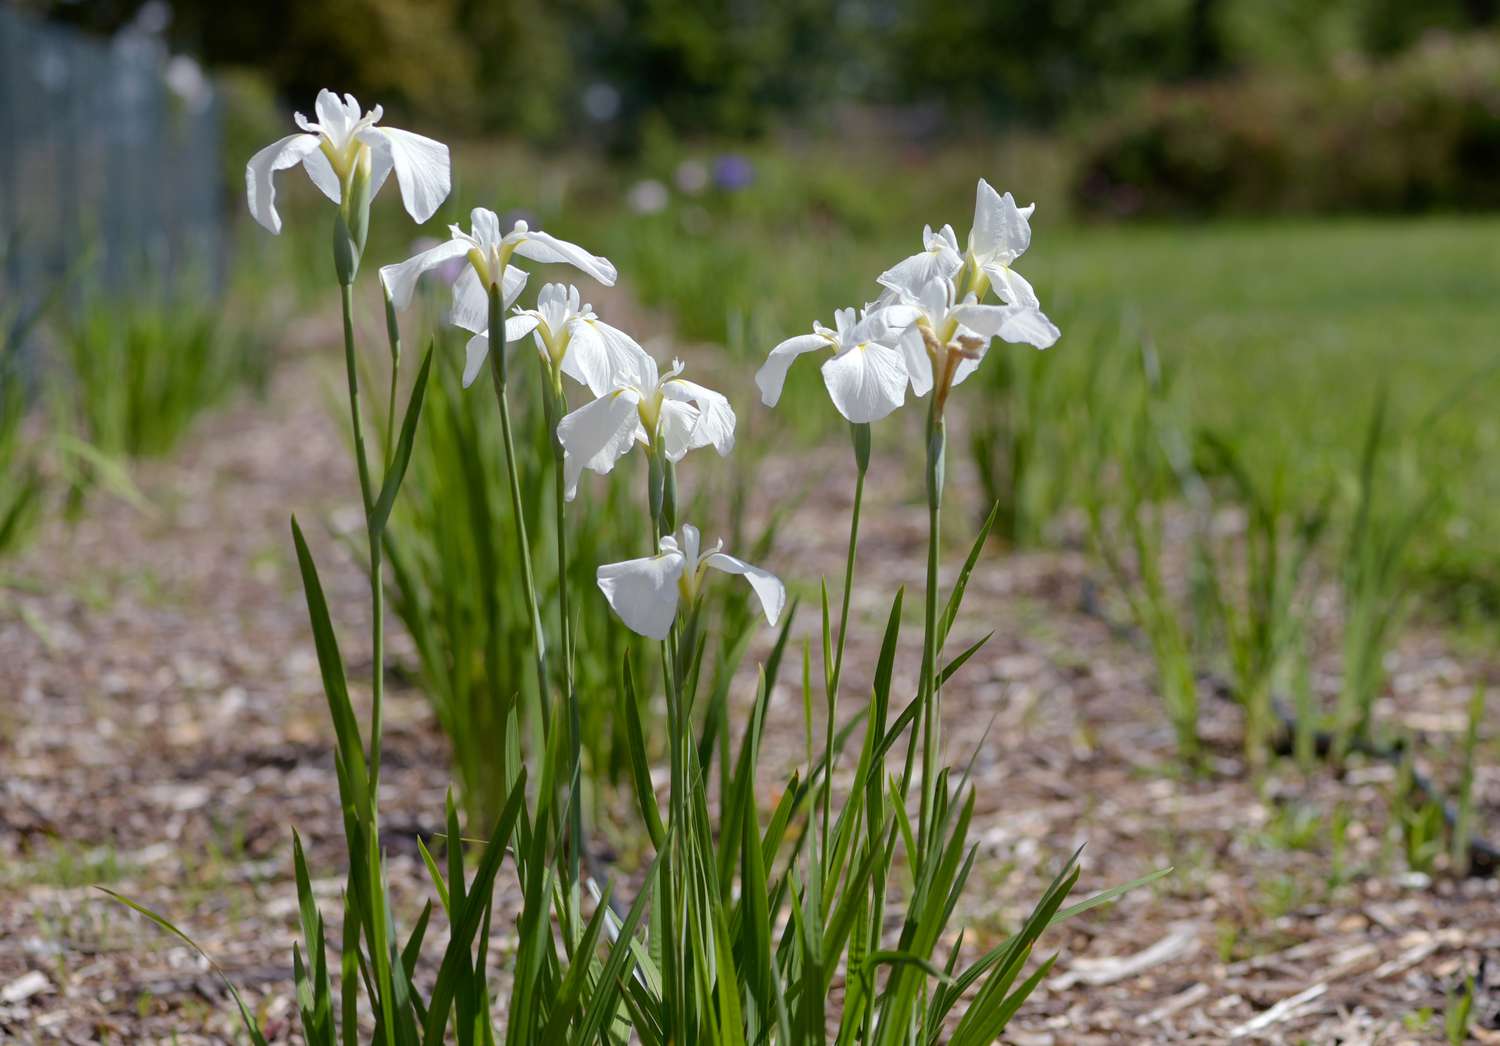 Can Japanese Iris Leaves Be Eaten? Planting Japanese Irises In My Vegetable Garden: Mistake Or Edible Delight?